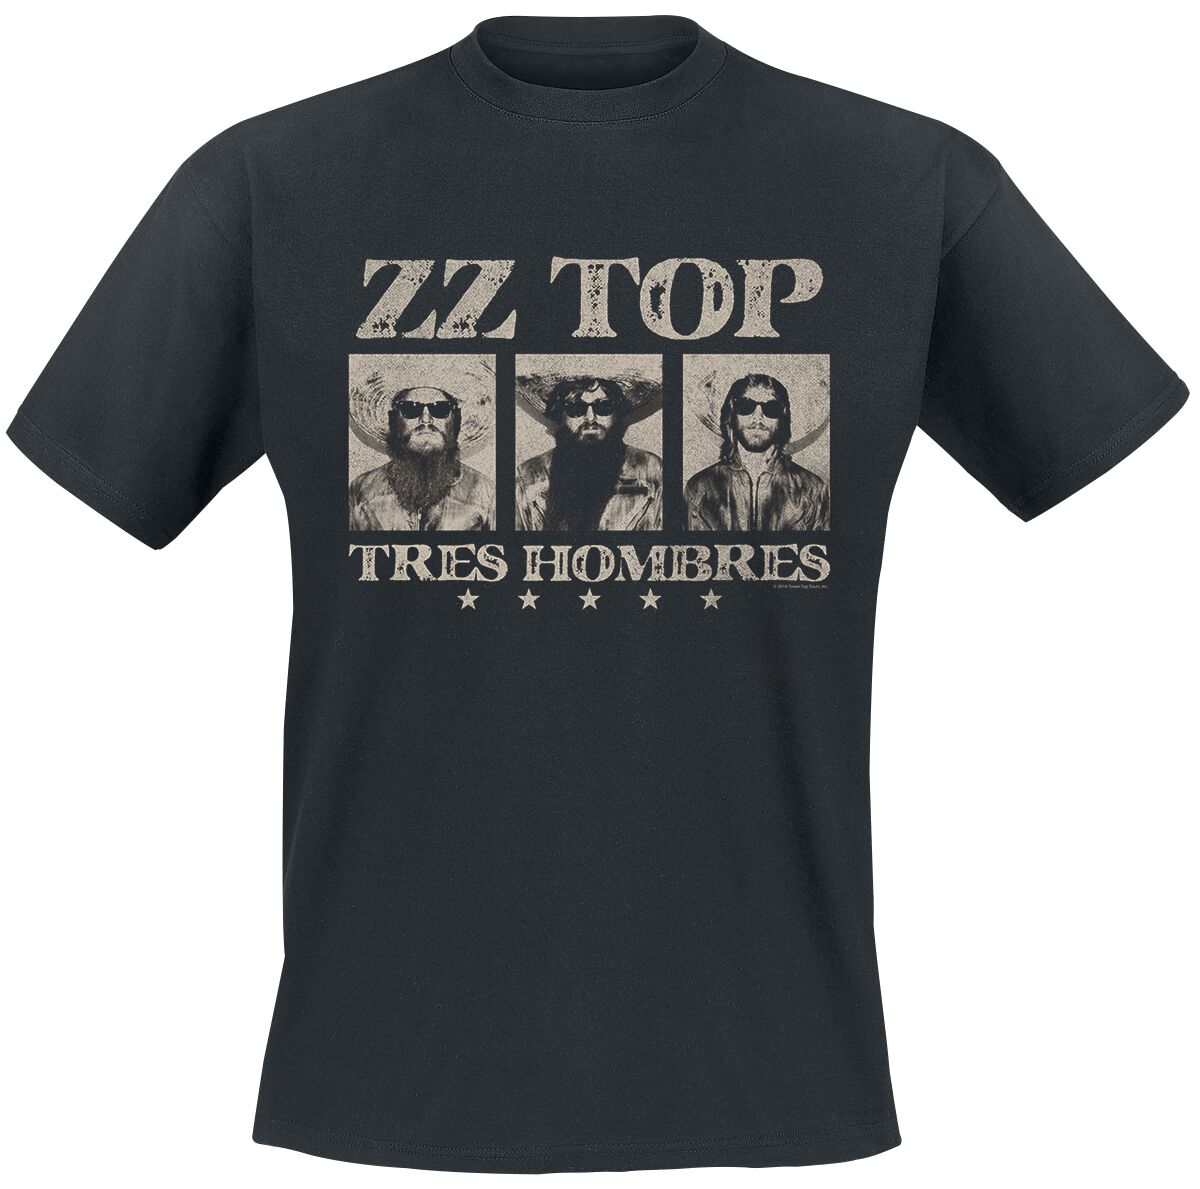 ZZ Top Tres hombres T-Shirt schwarz in L